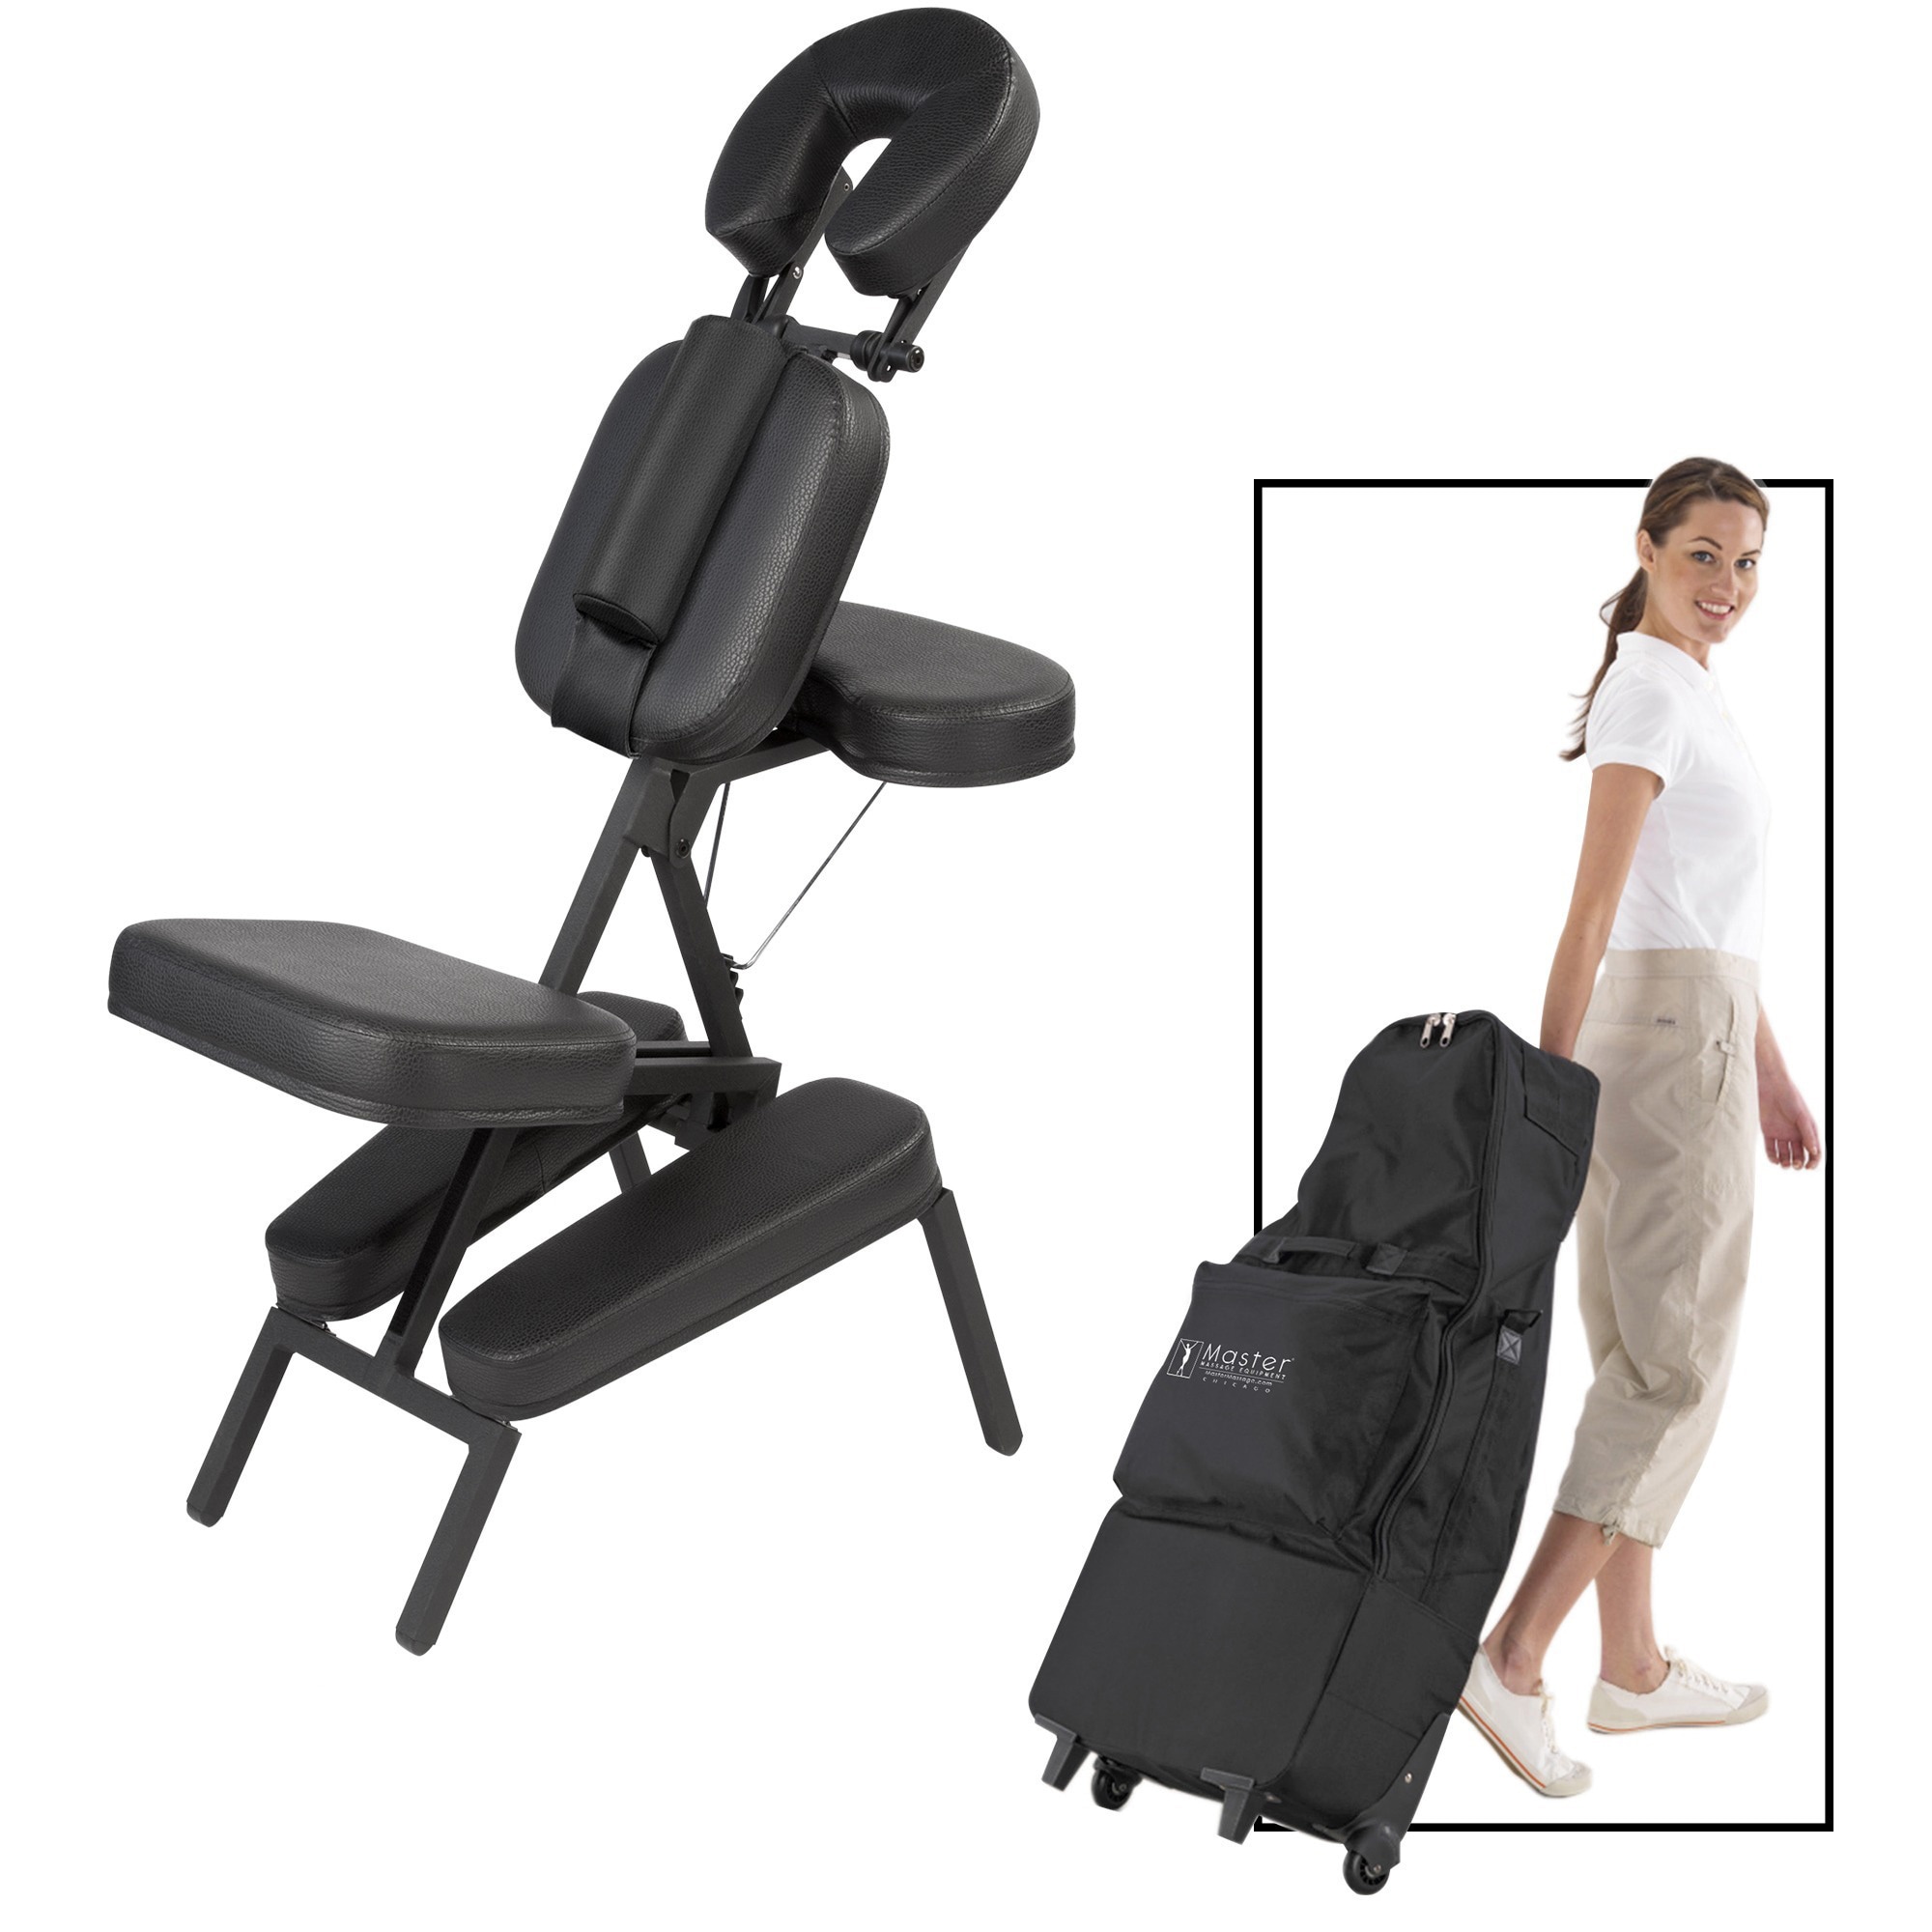 Apollo Portable Massage Chair